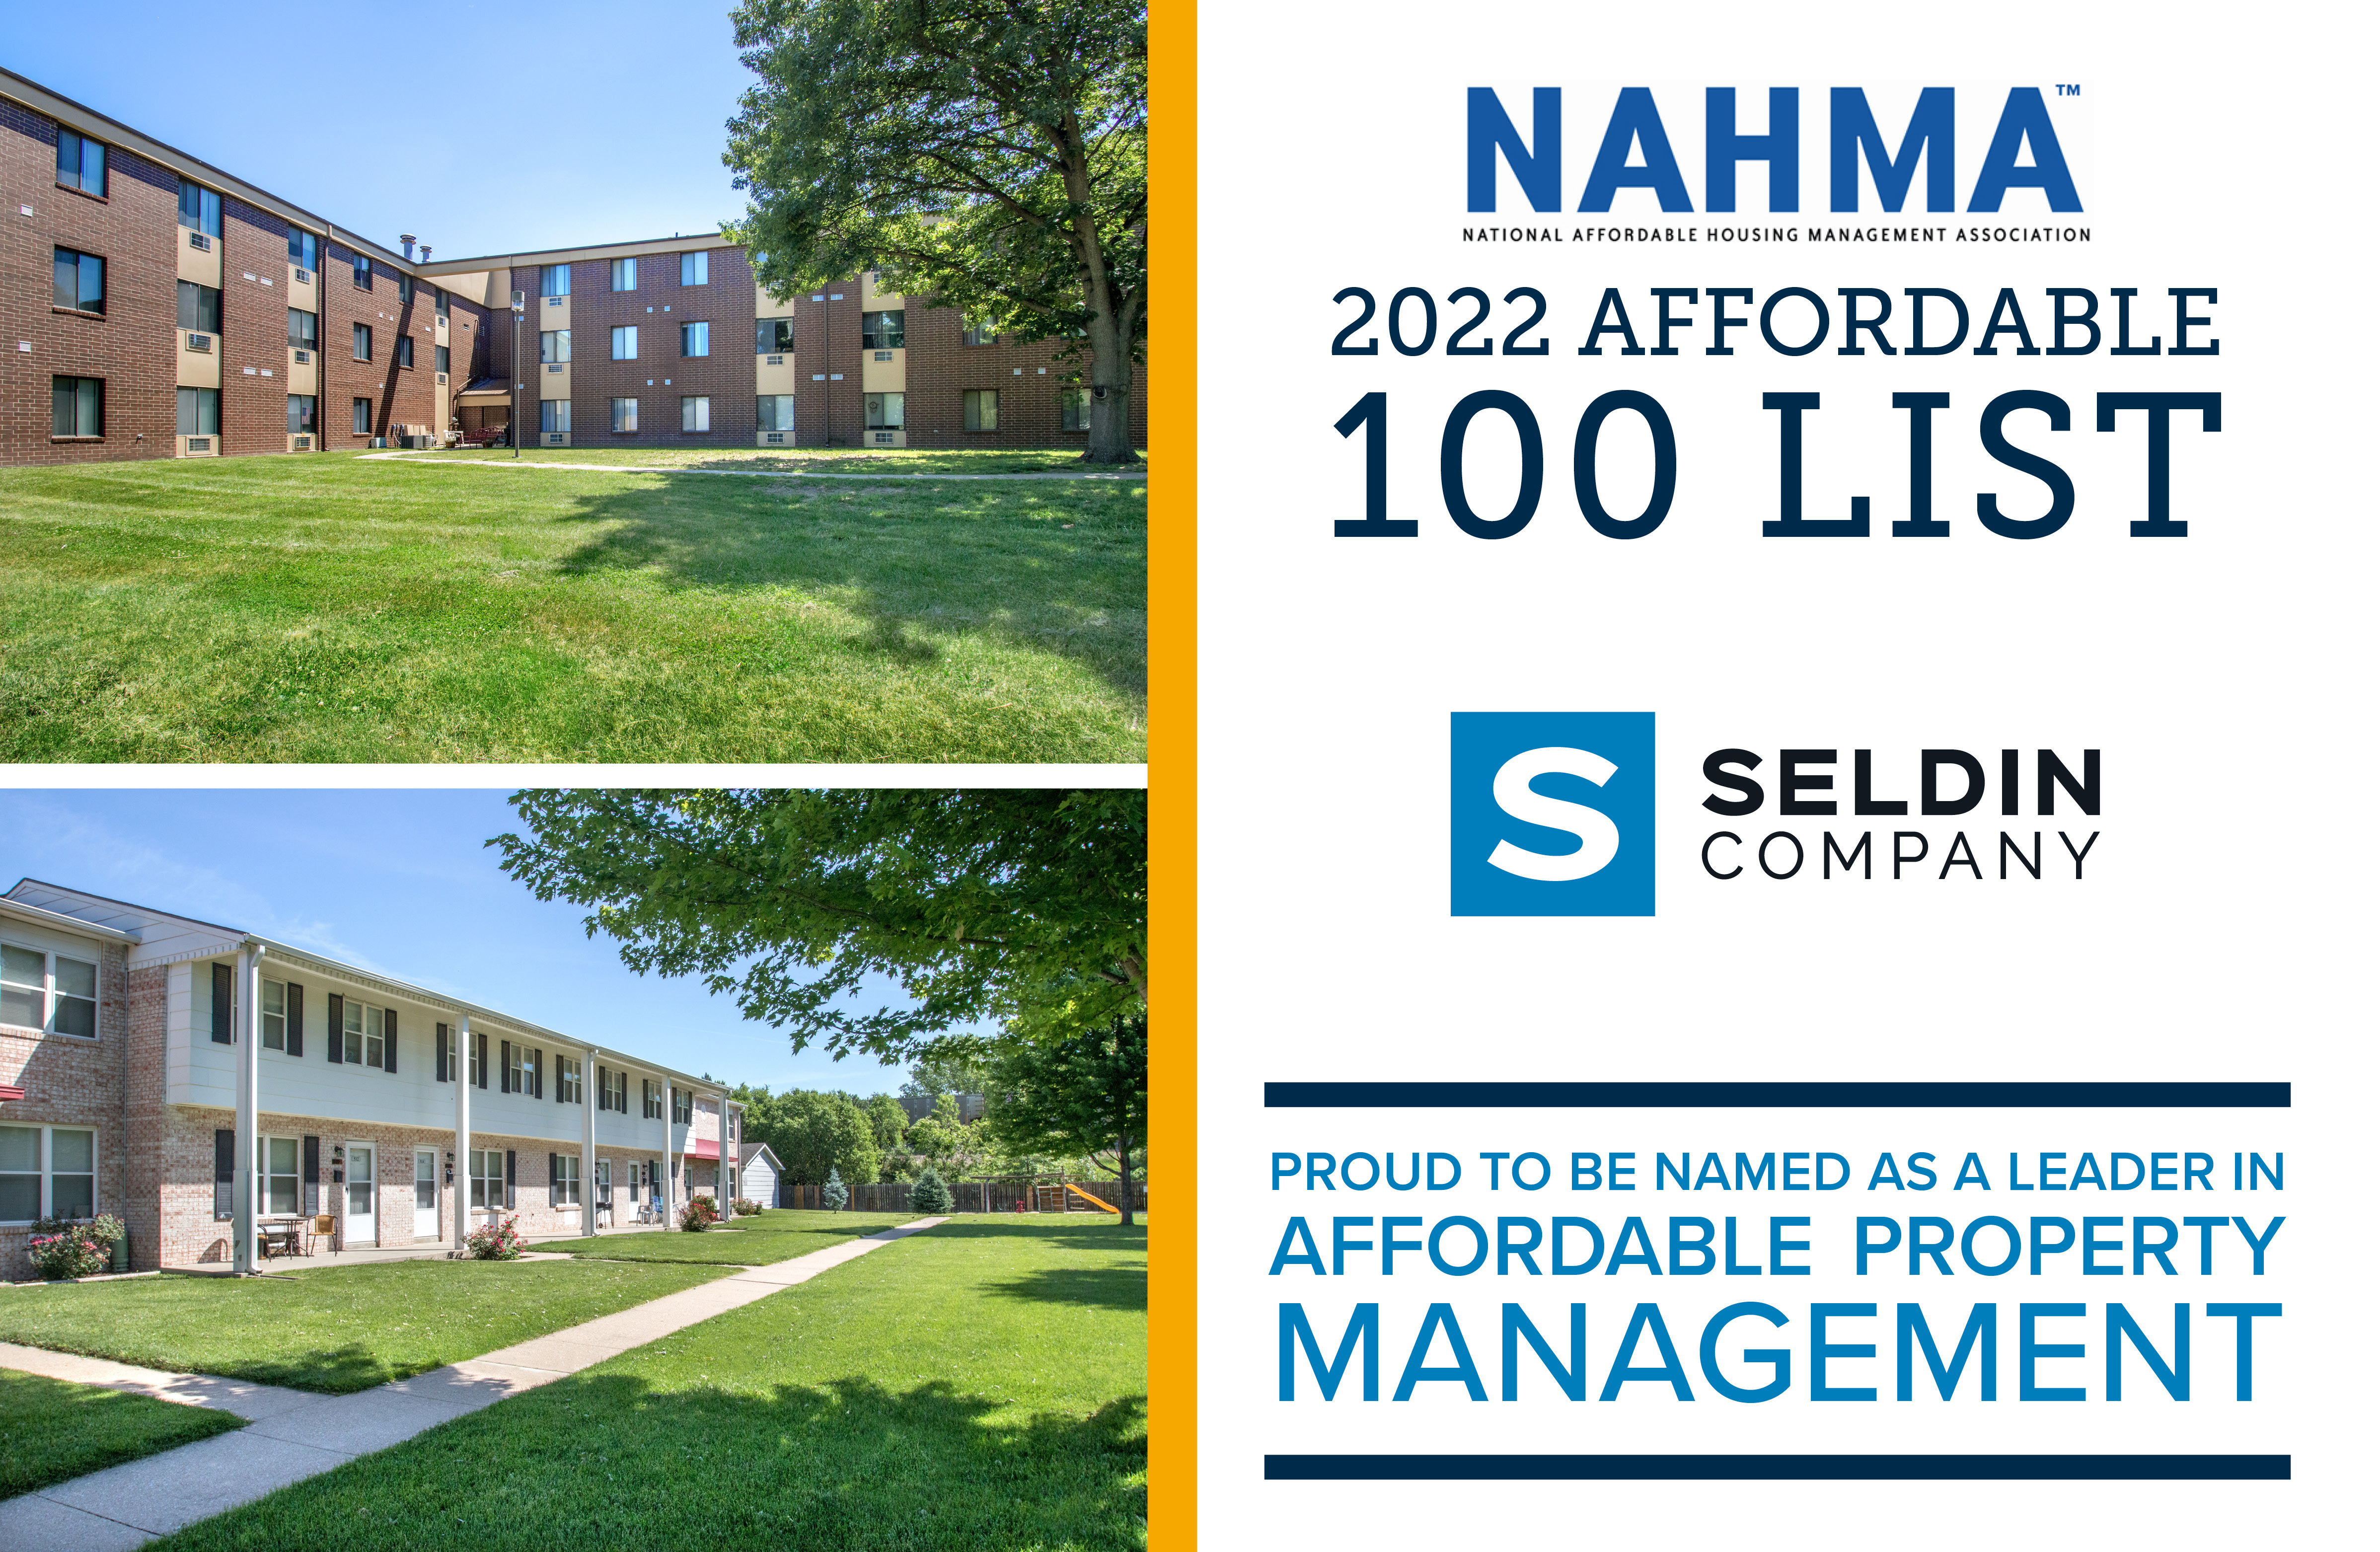 Seldin Company Earns Spot in the Top 50 of 2022 NAHMA Affordable 100 List